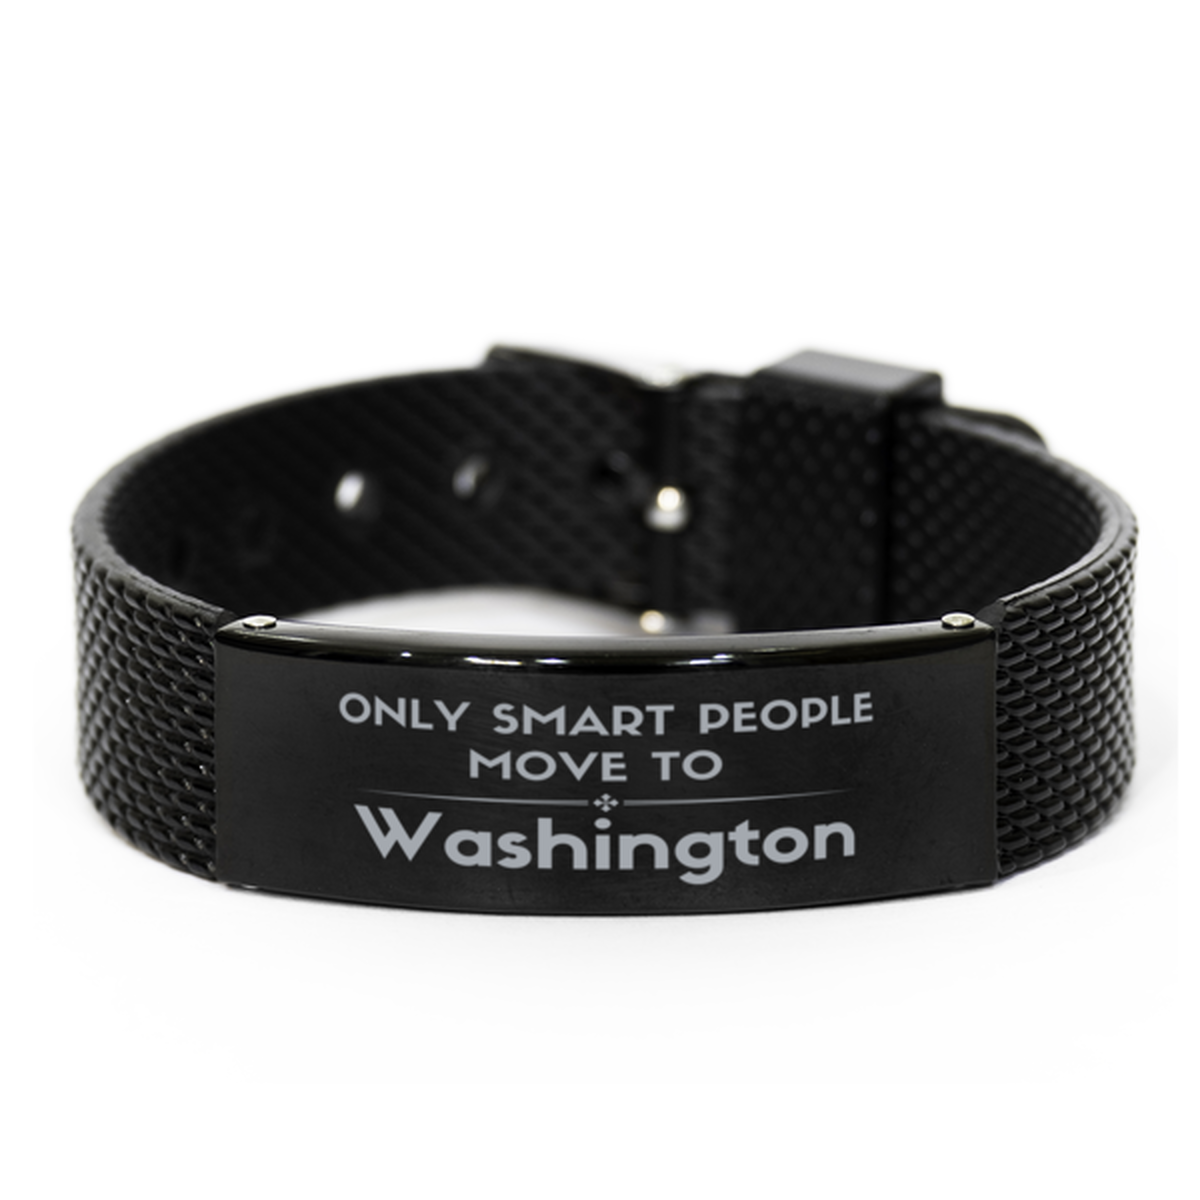 Only smart people move to Washington Black Shark Mesh Bracelet, Gag Gifts For Washington, Move to Washington Gifts for Friends Coworker Funny Saying Quote